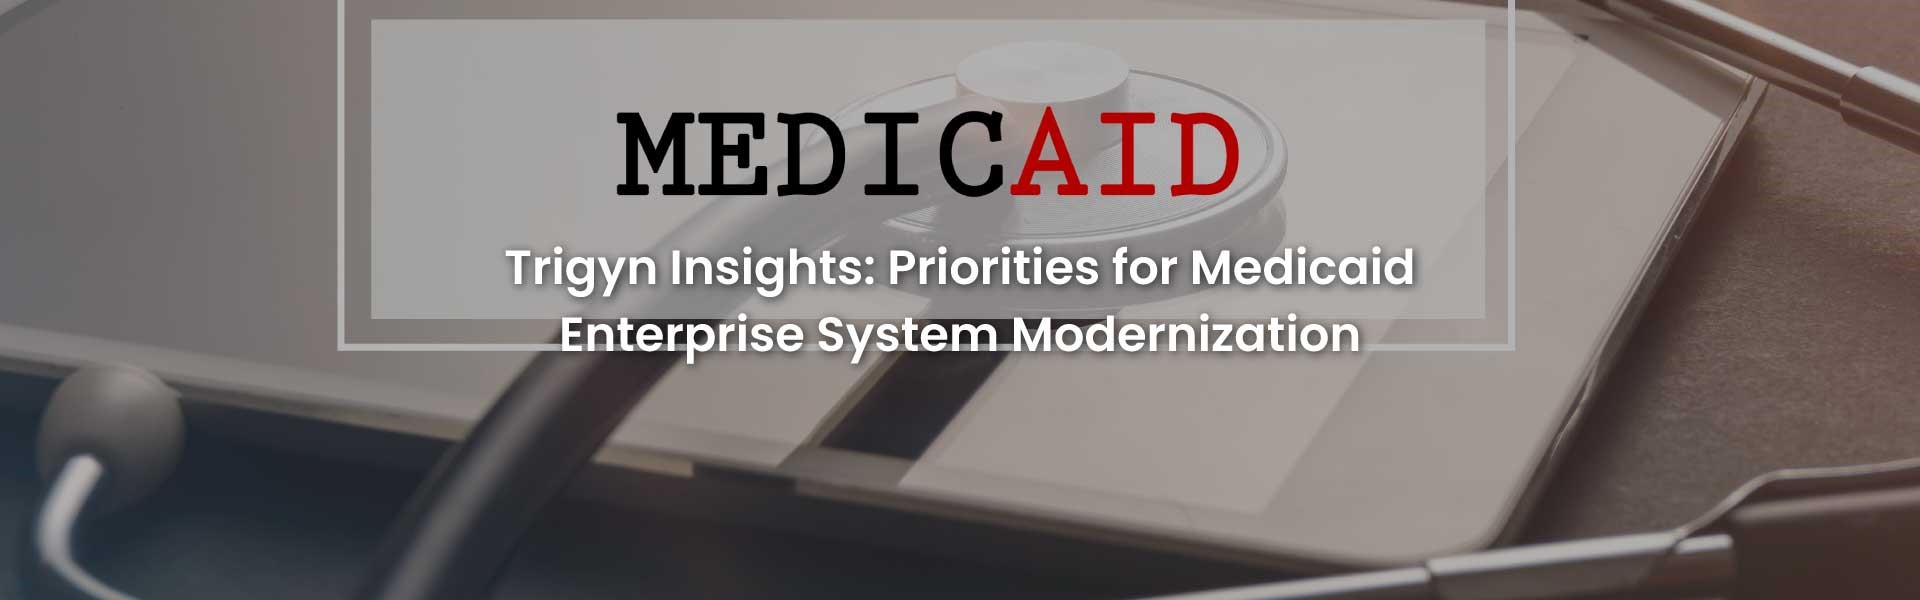 Medicaid Enterprise System Modernization